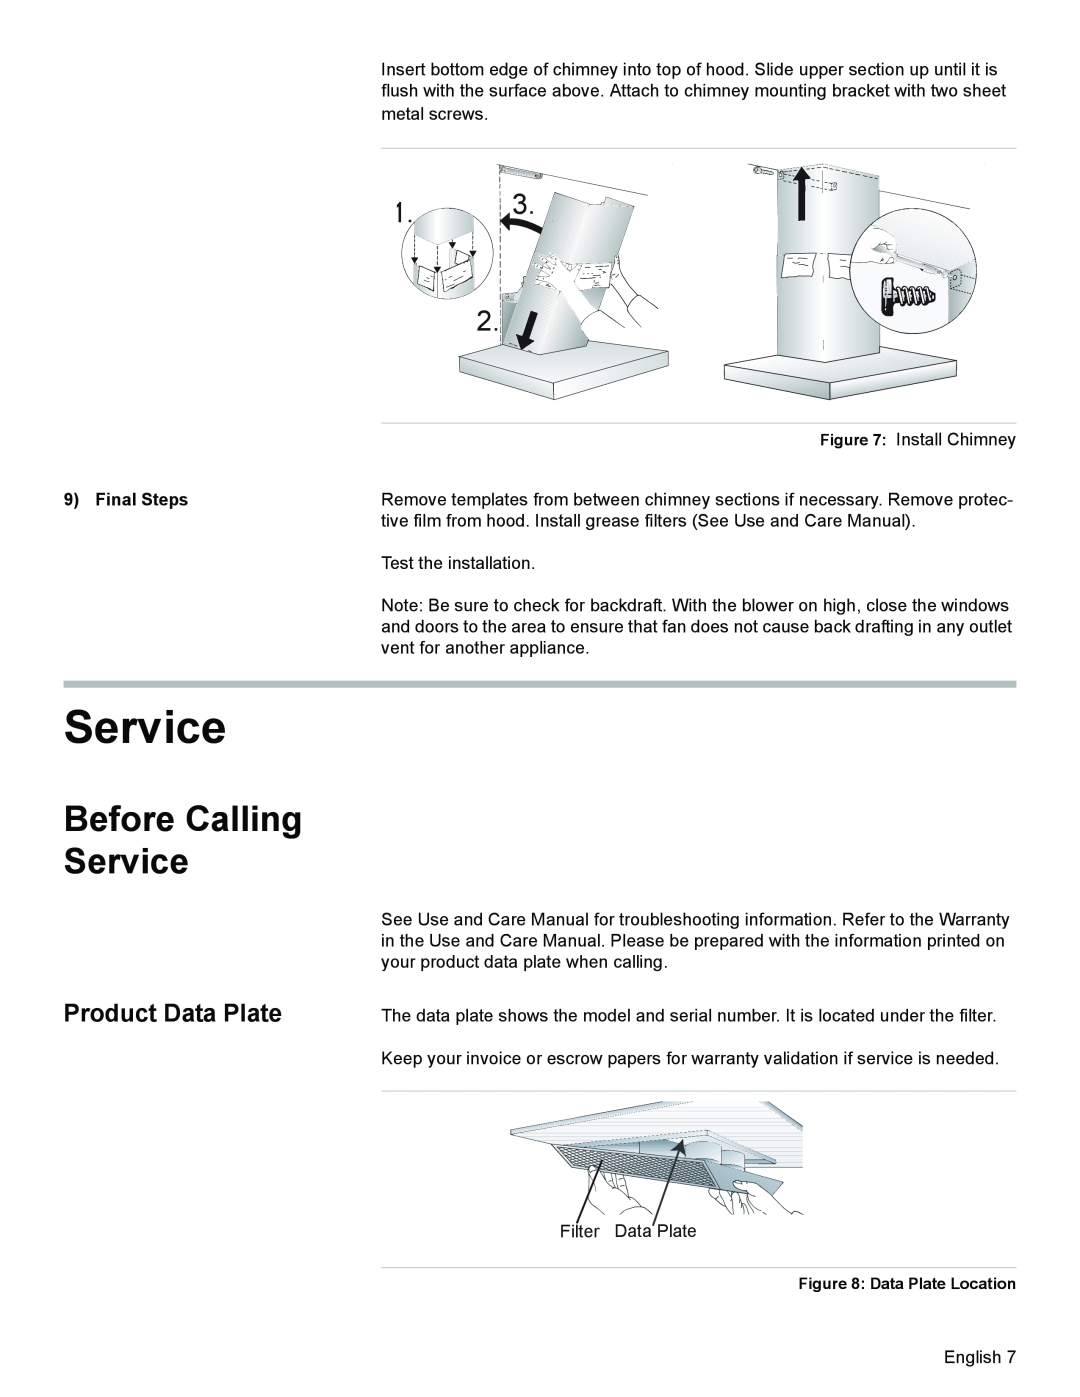 Bosch Appliances DKE96 installation manual Before Calling Service, Product Data Plate, Final Steps 